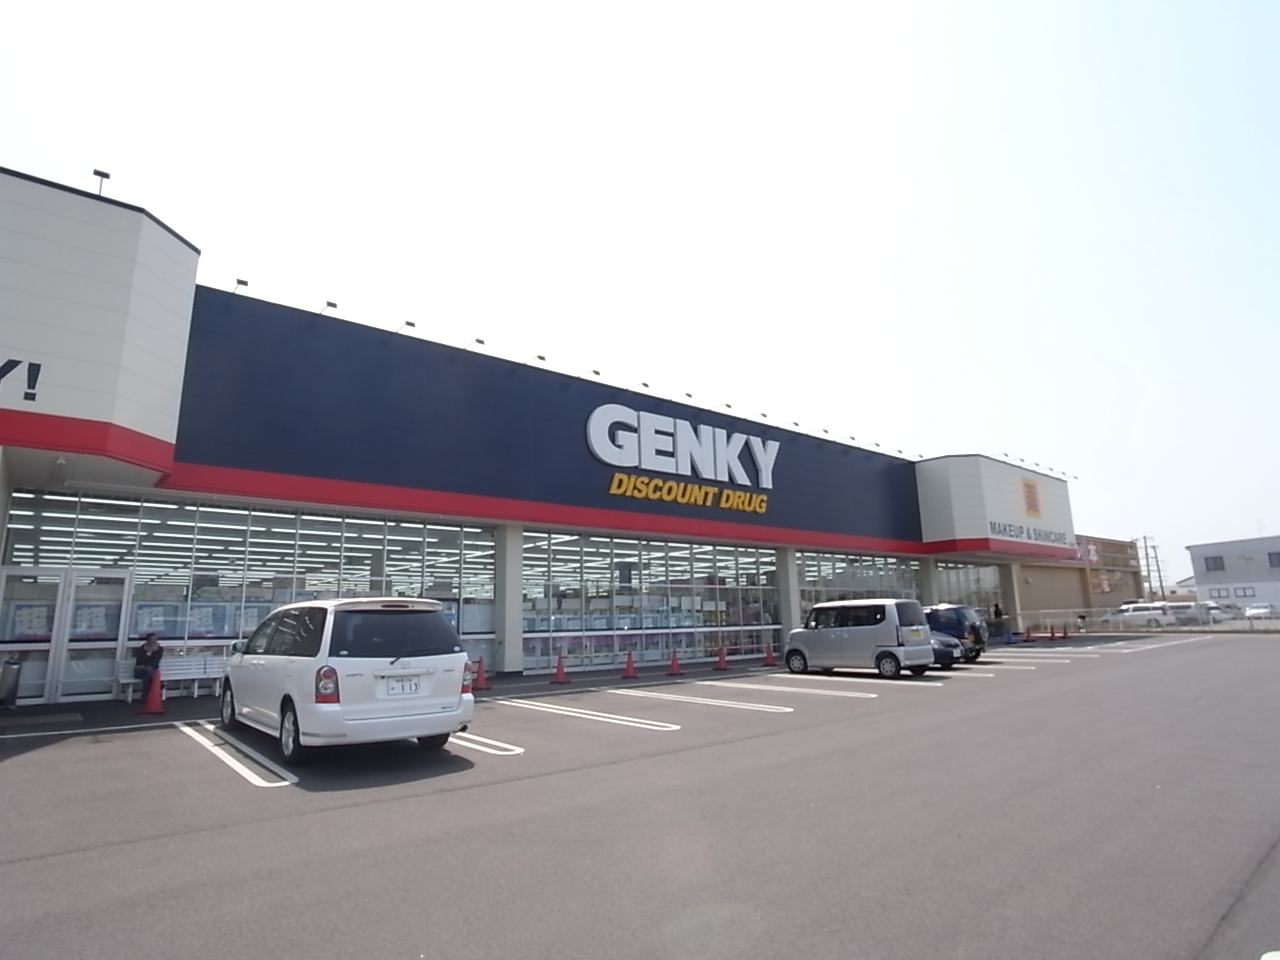 Dorakkusutoa. Genki institutions Inaguchi shop 1387m until (drugstore)